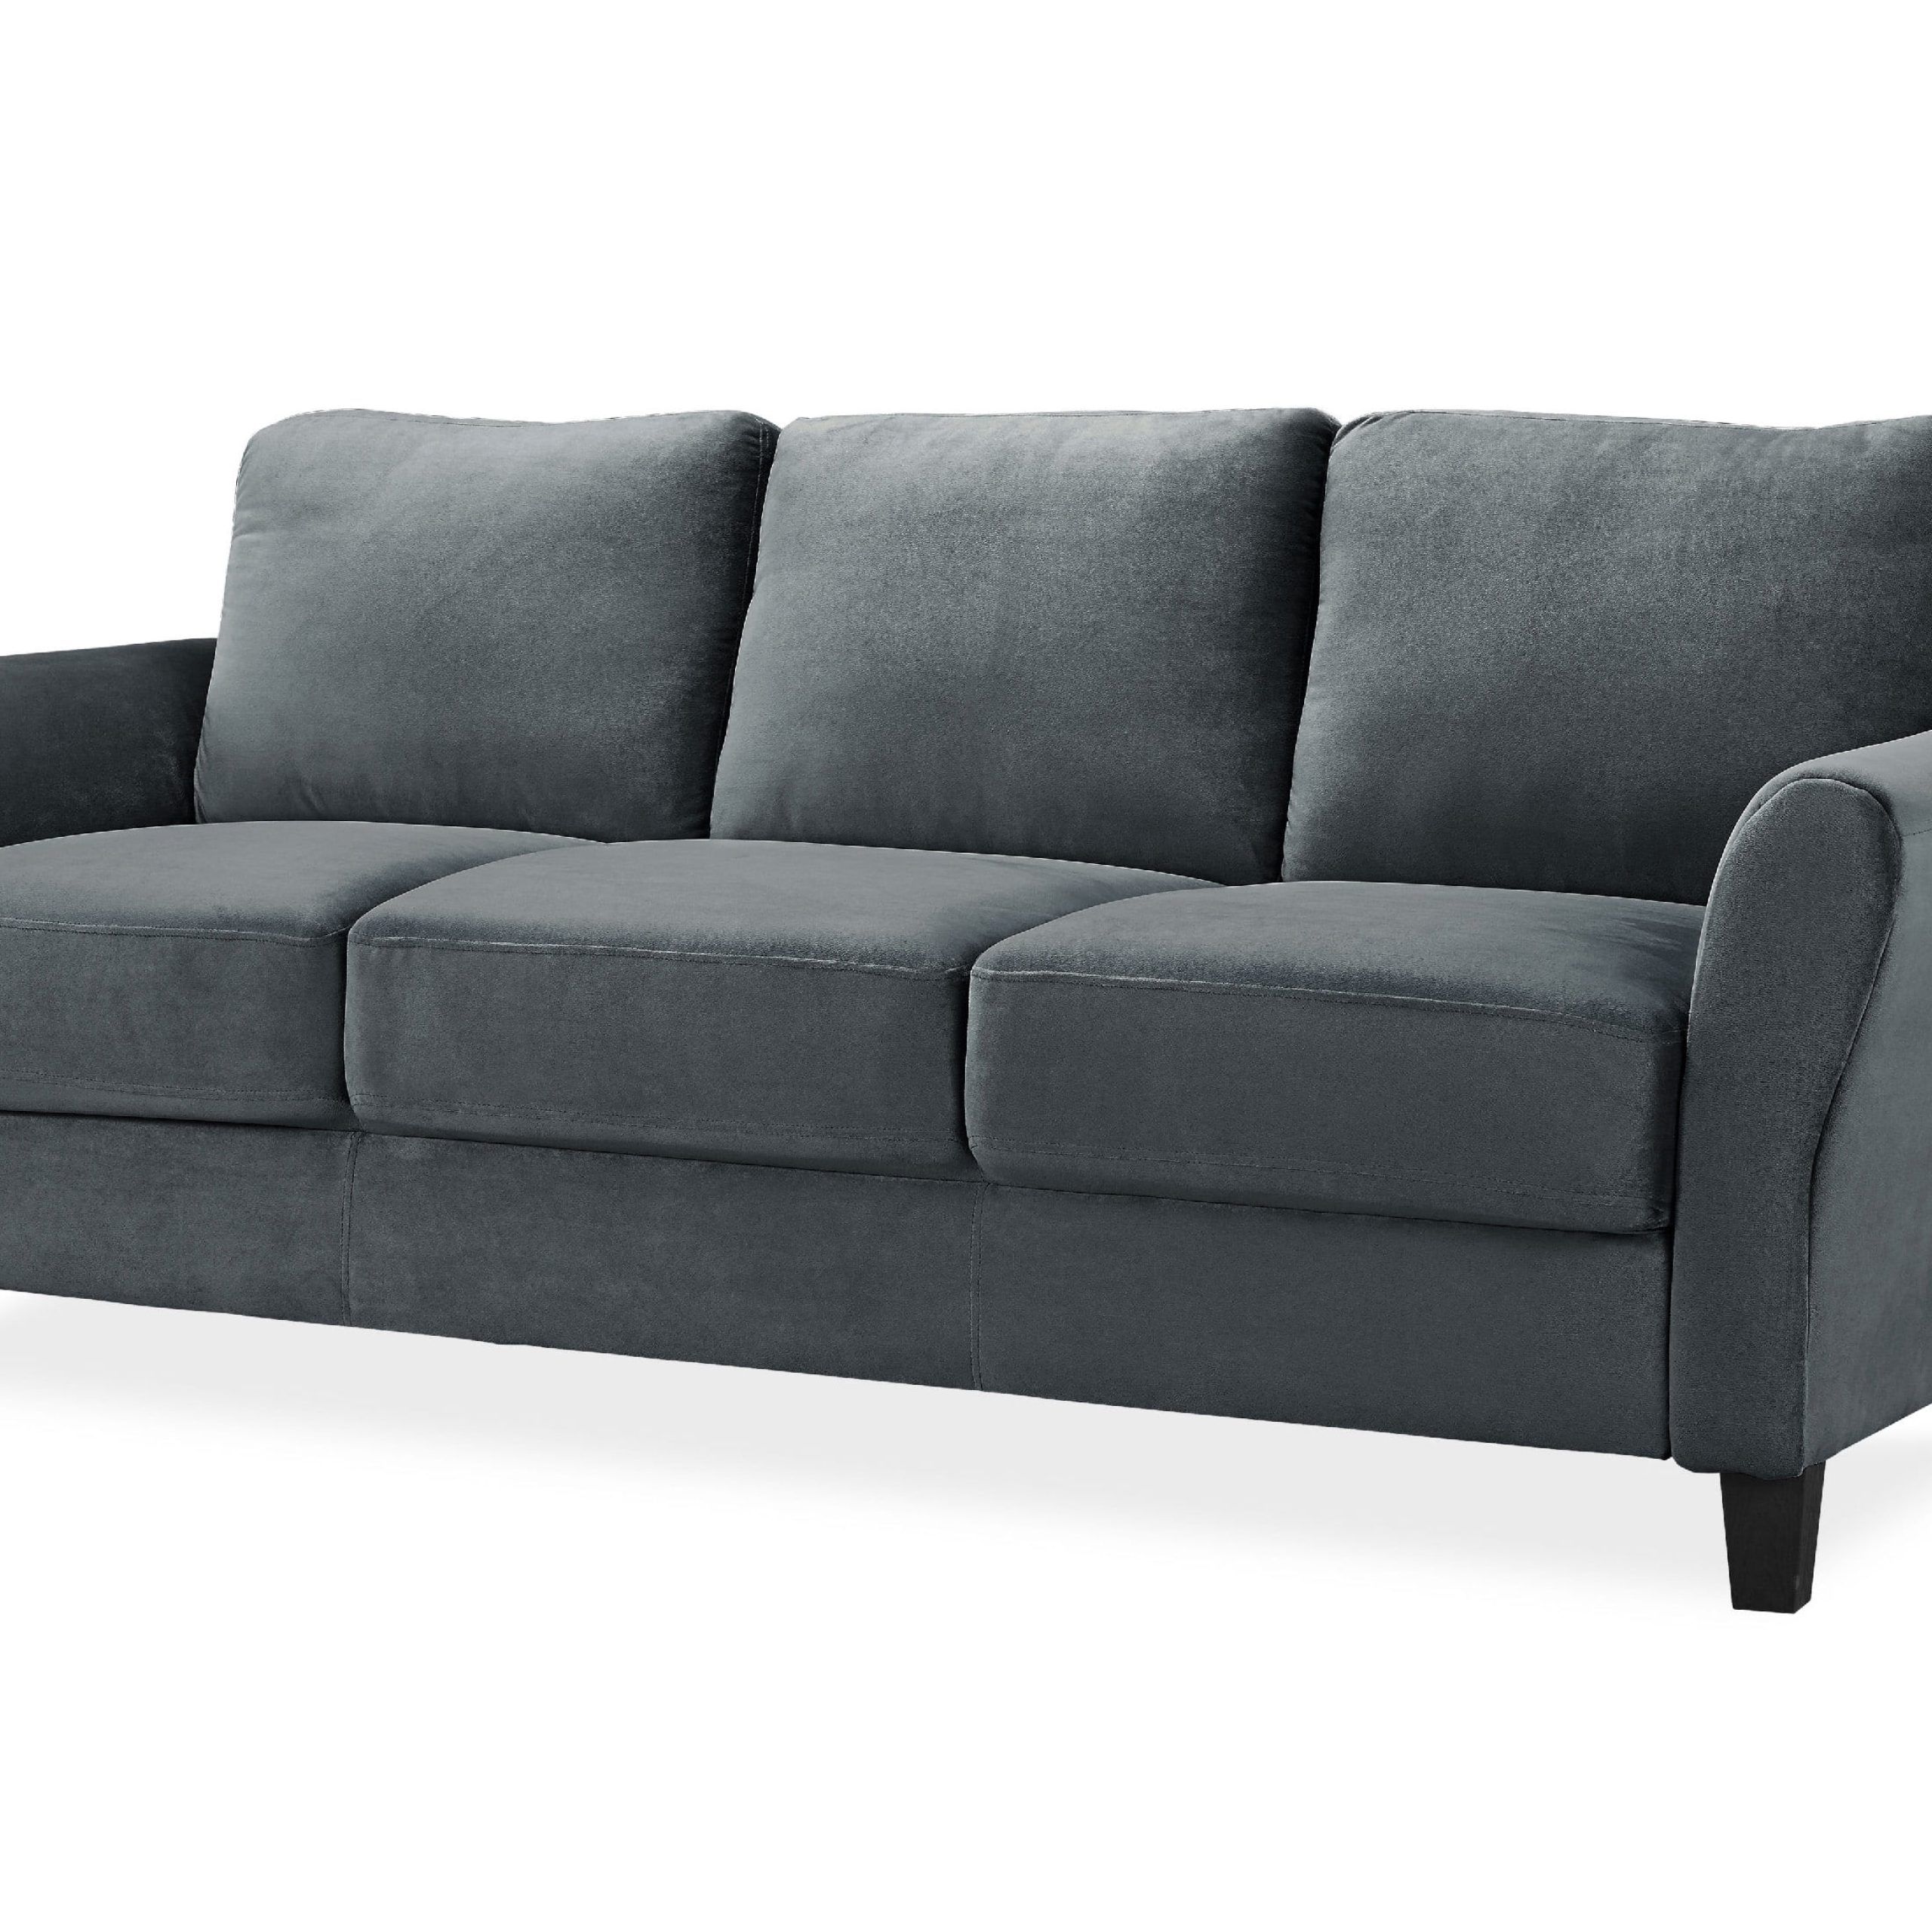 Dark Grey Polyester Sofa Couches Regarding Preferred Lifestyle Solutions Alexa Sofa, Dark Grey Microfiber – Walmart (View 7 of 15)